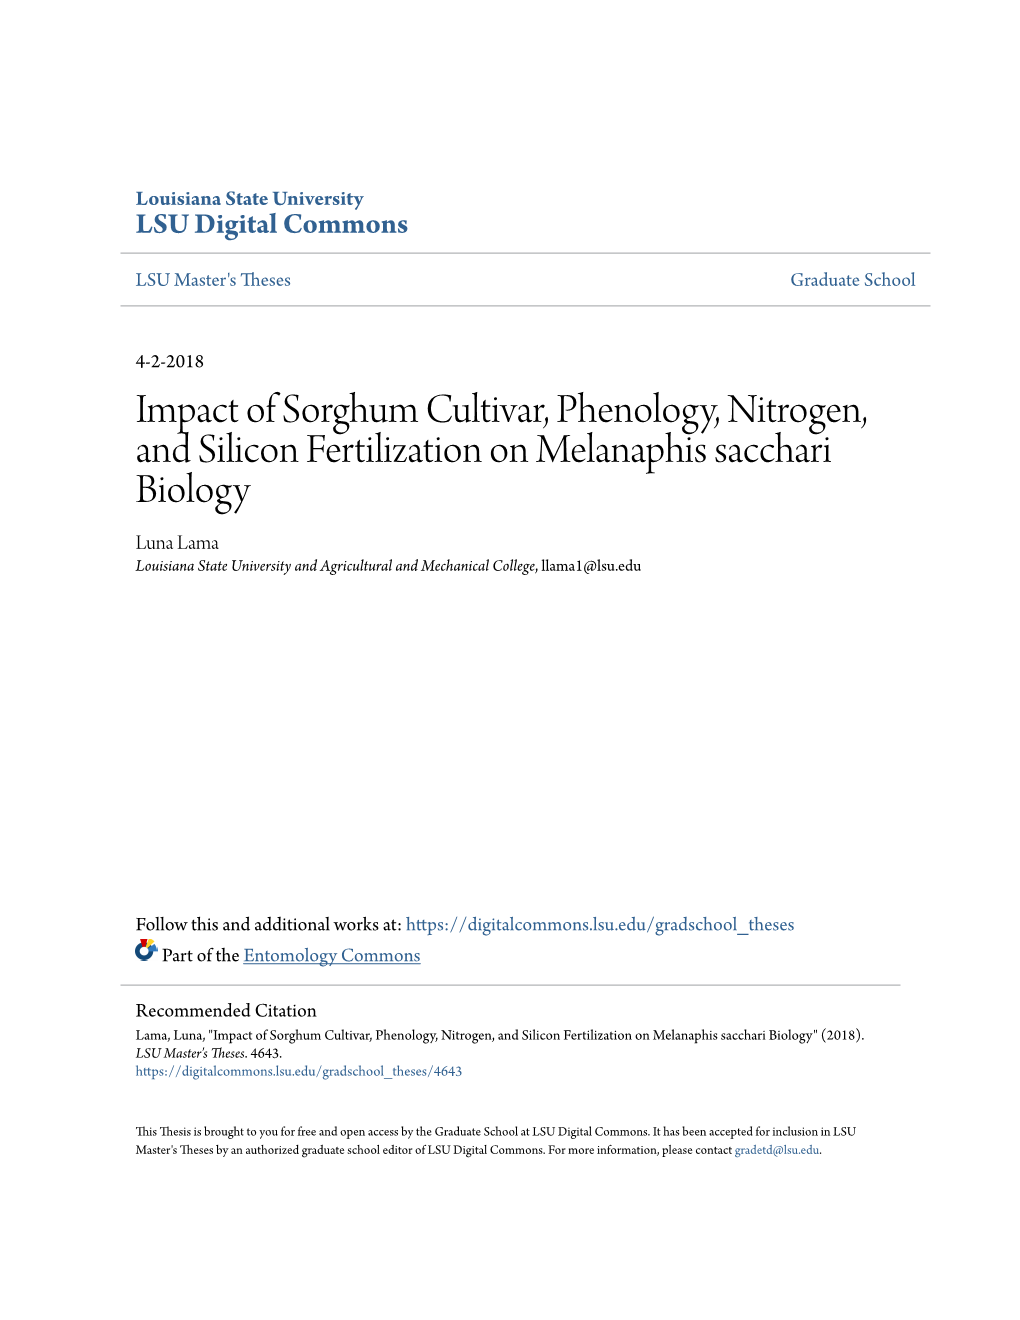 Impact of Sorghum Cultivar, Phenology, Nitrogen, and Silicon Fertilization on Melanaphis Sacchari Biology